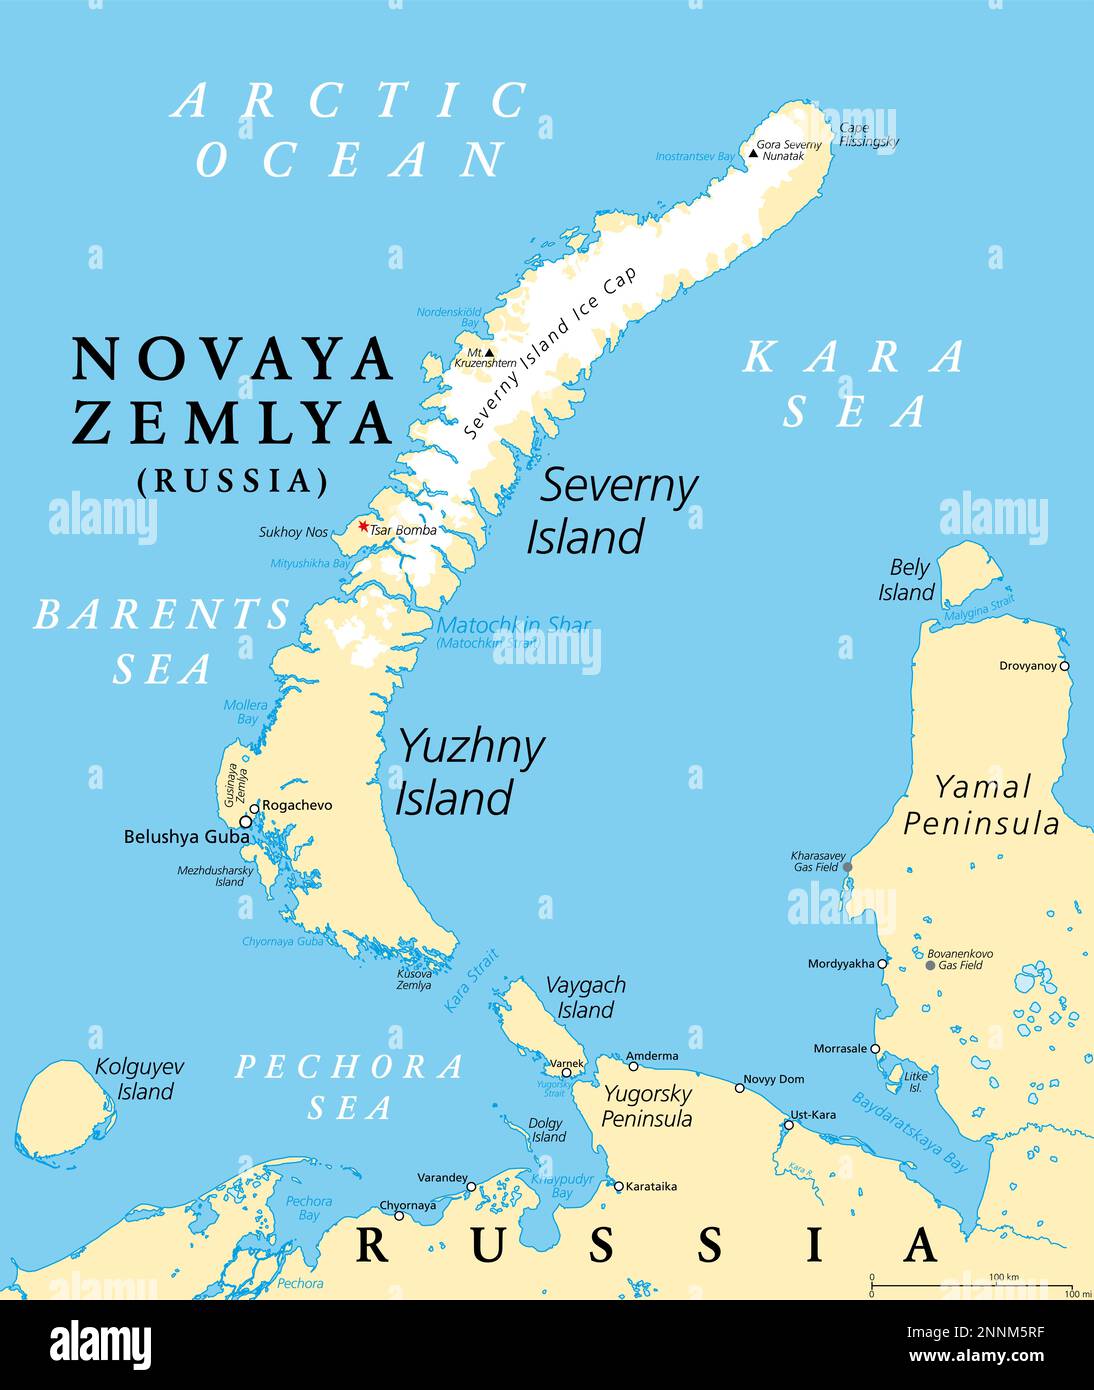 Novaya Zemlya, archipelago in northern Russia, political map. Situated in Arctic Ocean, between Barents Sea and Kara Sea. Stock Photo